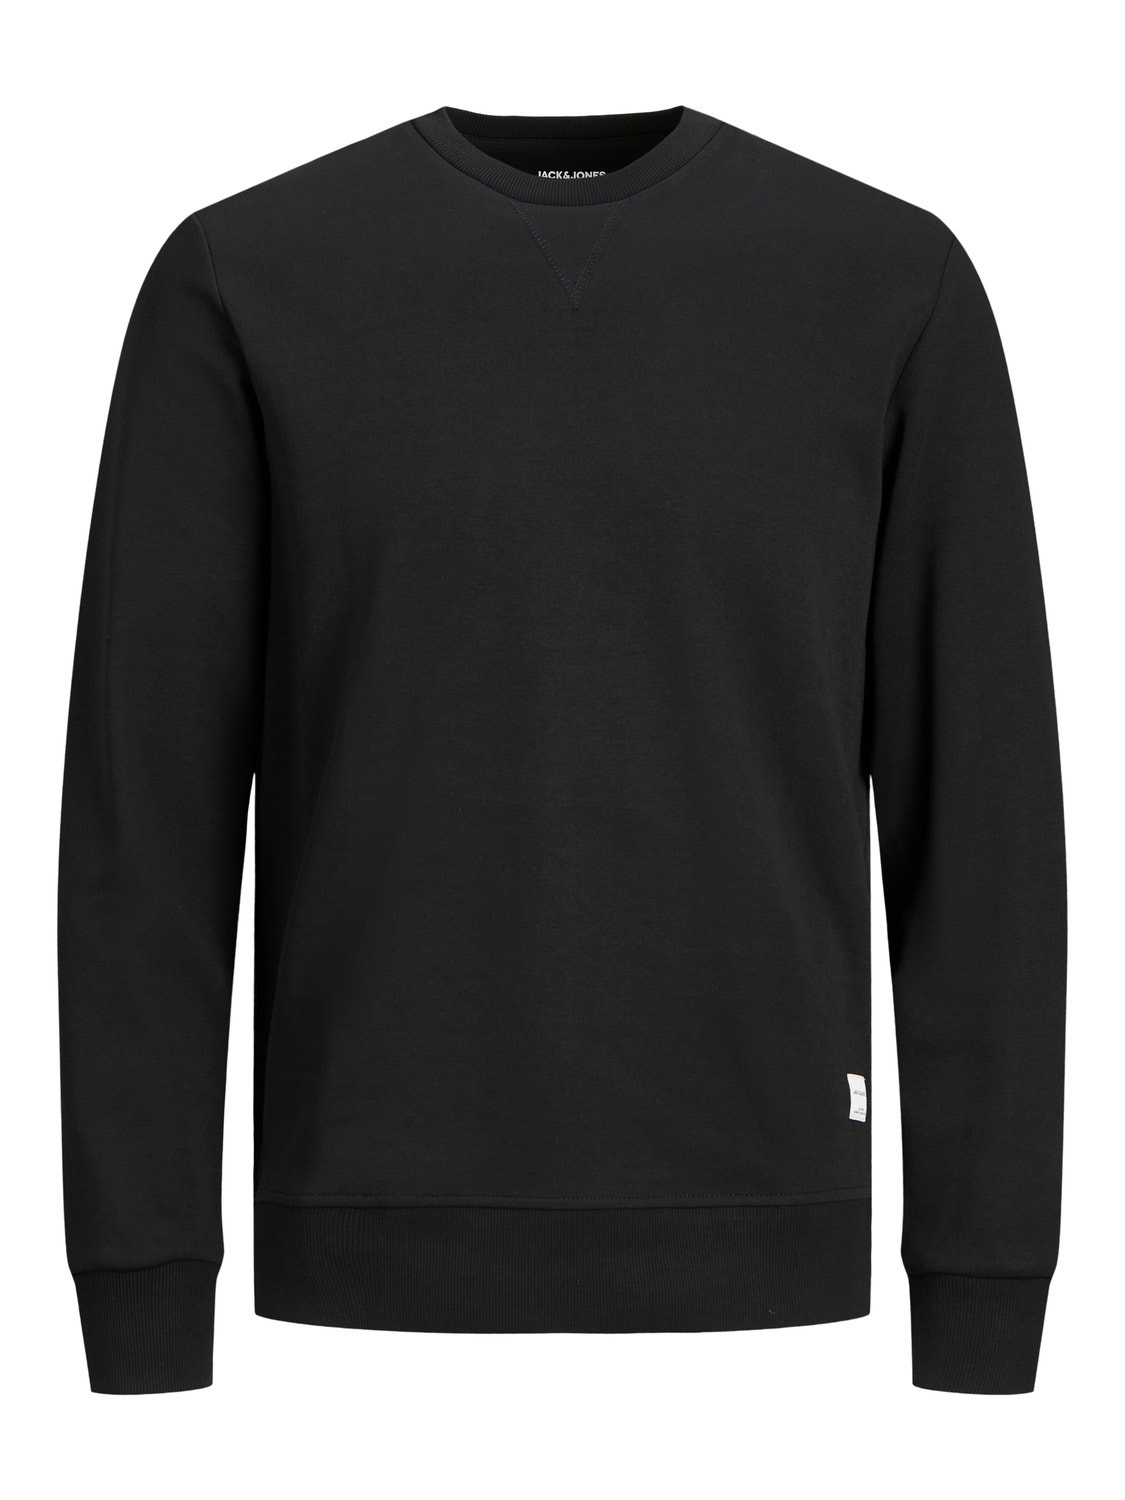 Jack & Jones Plus Size Plain Crew neck Sweatshirt -Black - 12182567